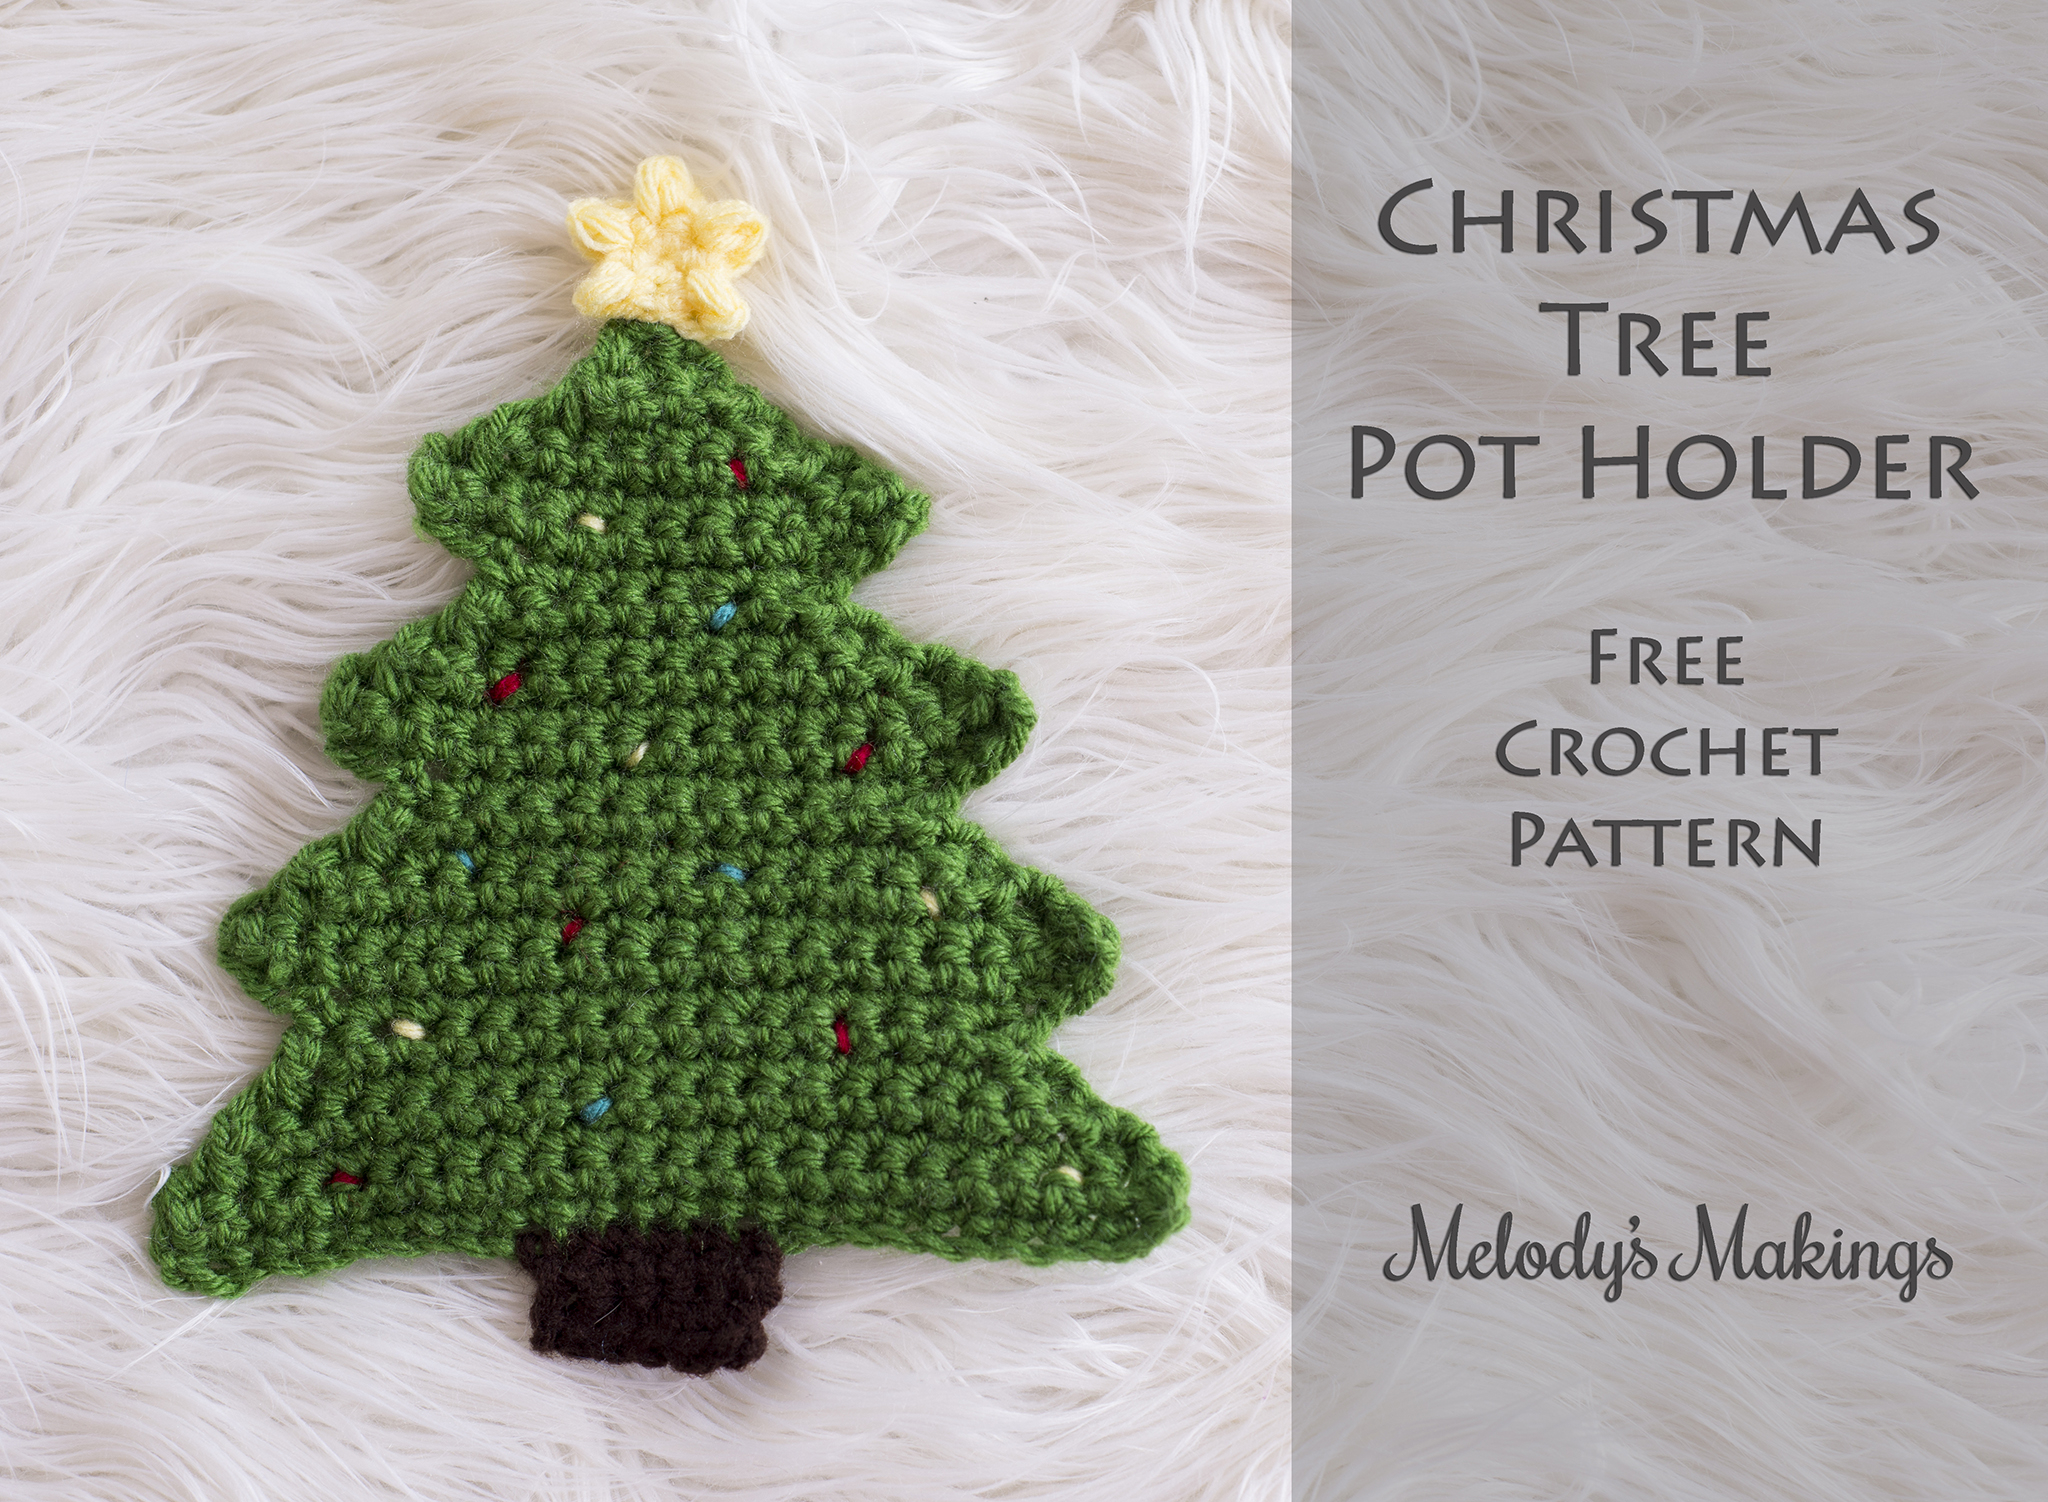 Knit Christmas Ornament Patterns Christmas Tree Pot Holder Pattern Crochet Knit Melodys Makings